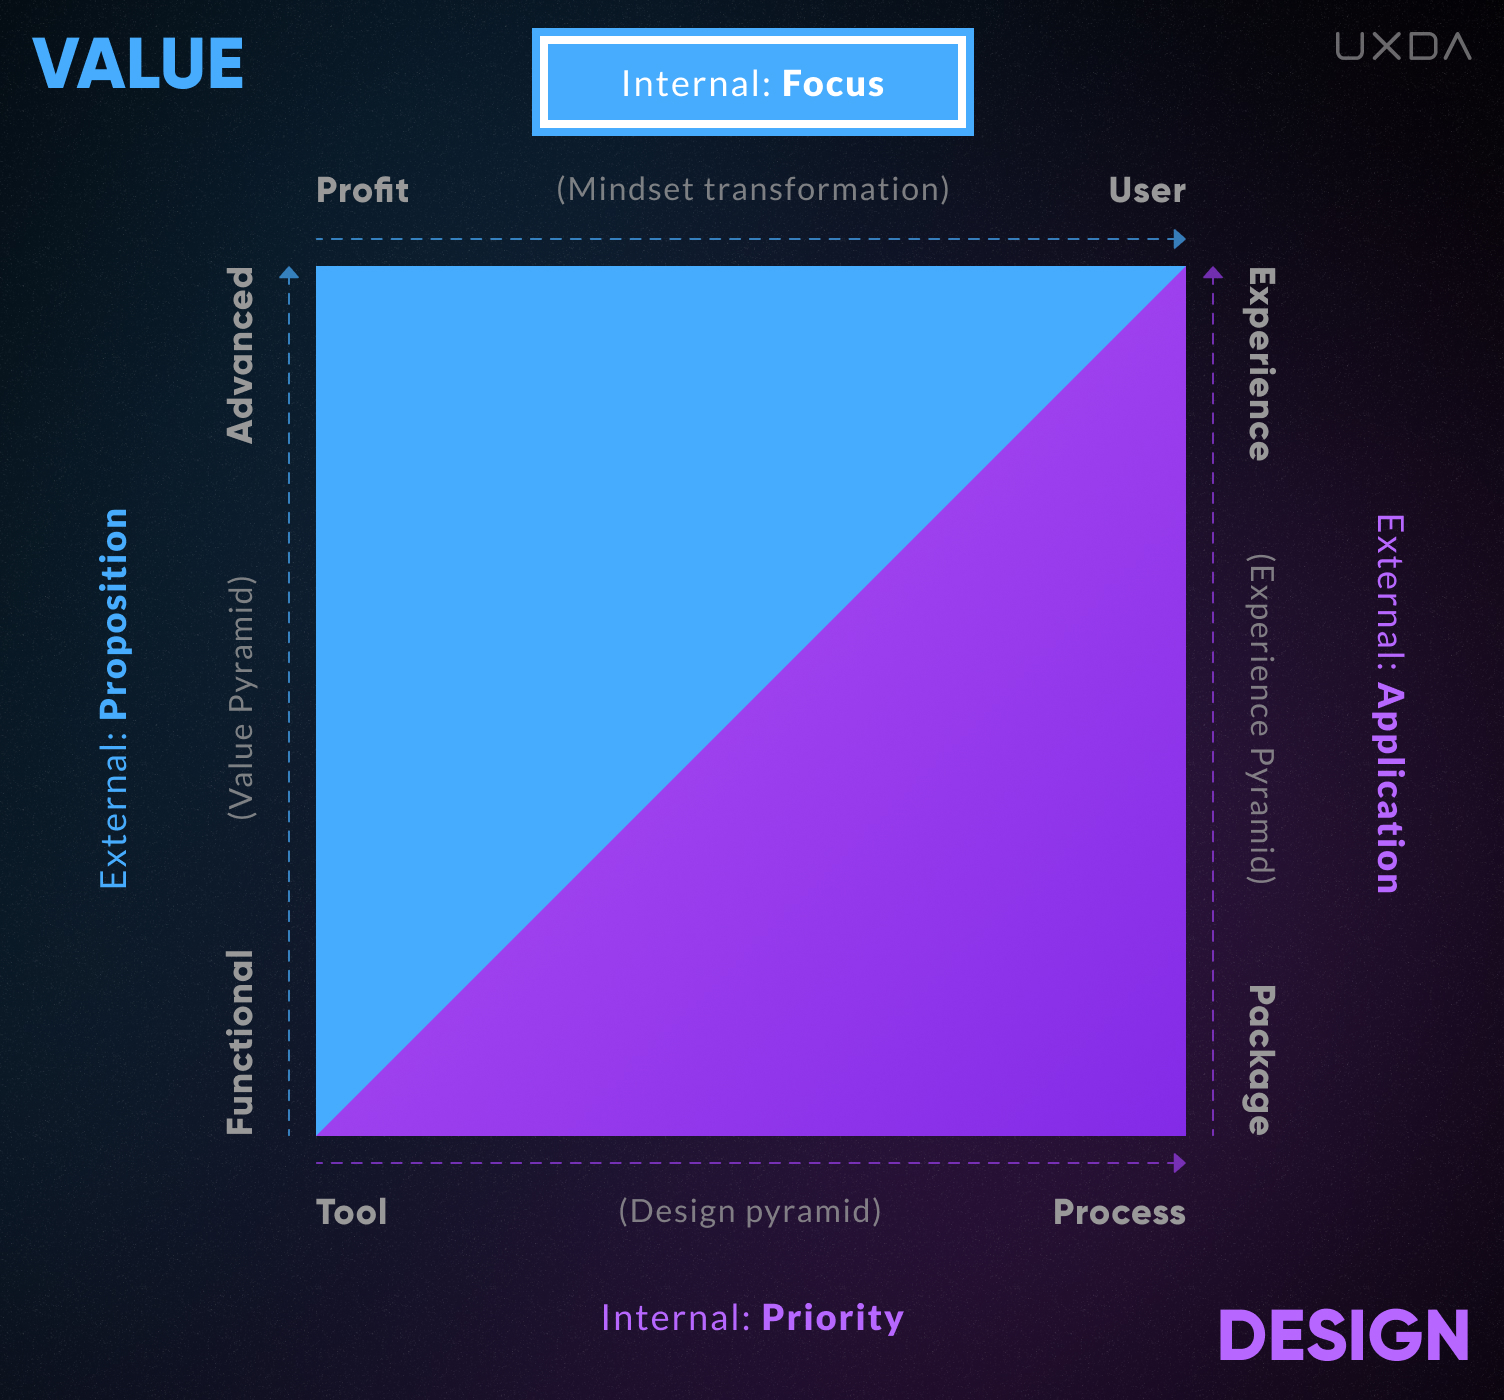 The UX Design Matrix Purpose-Driven Banking Culture Value focus internal